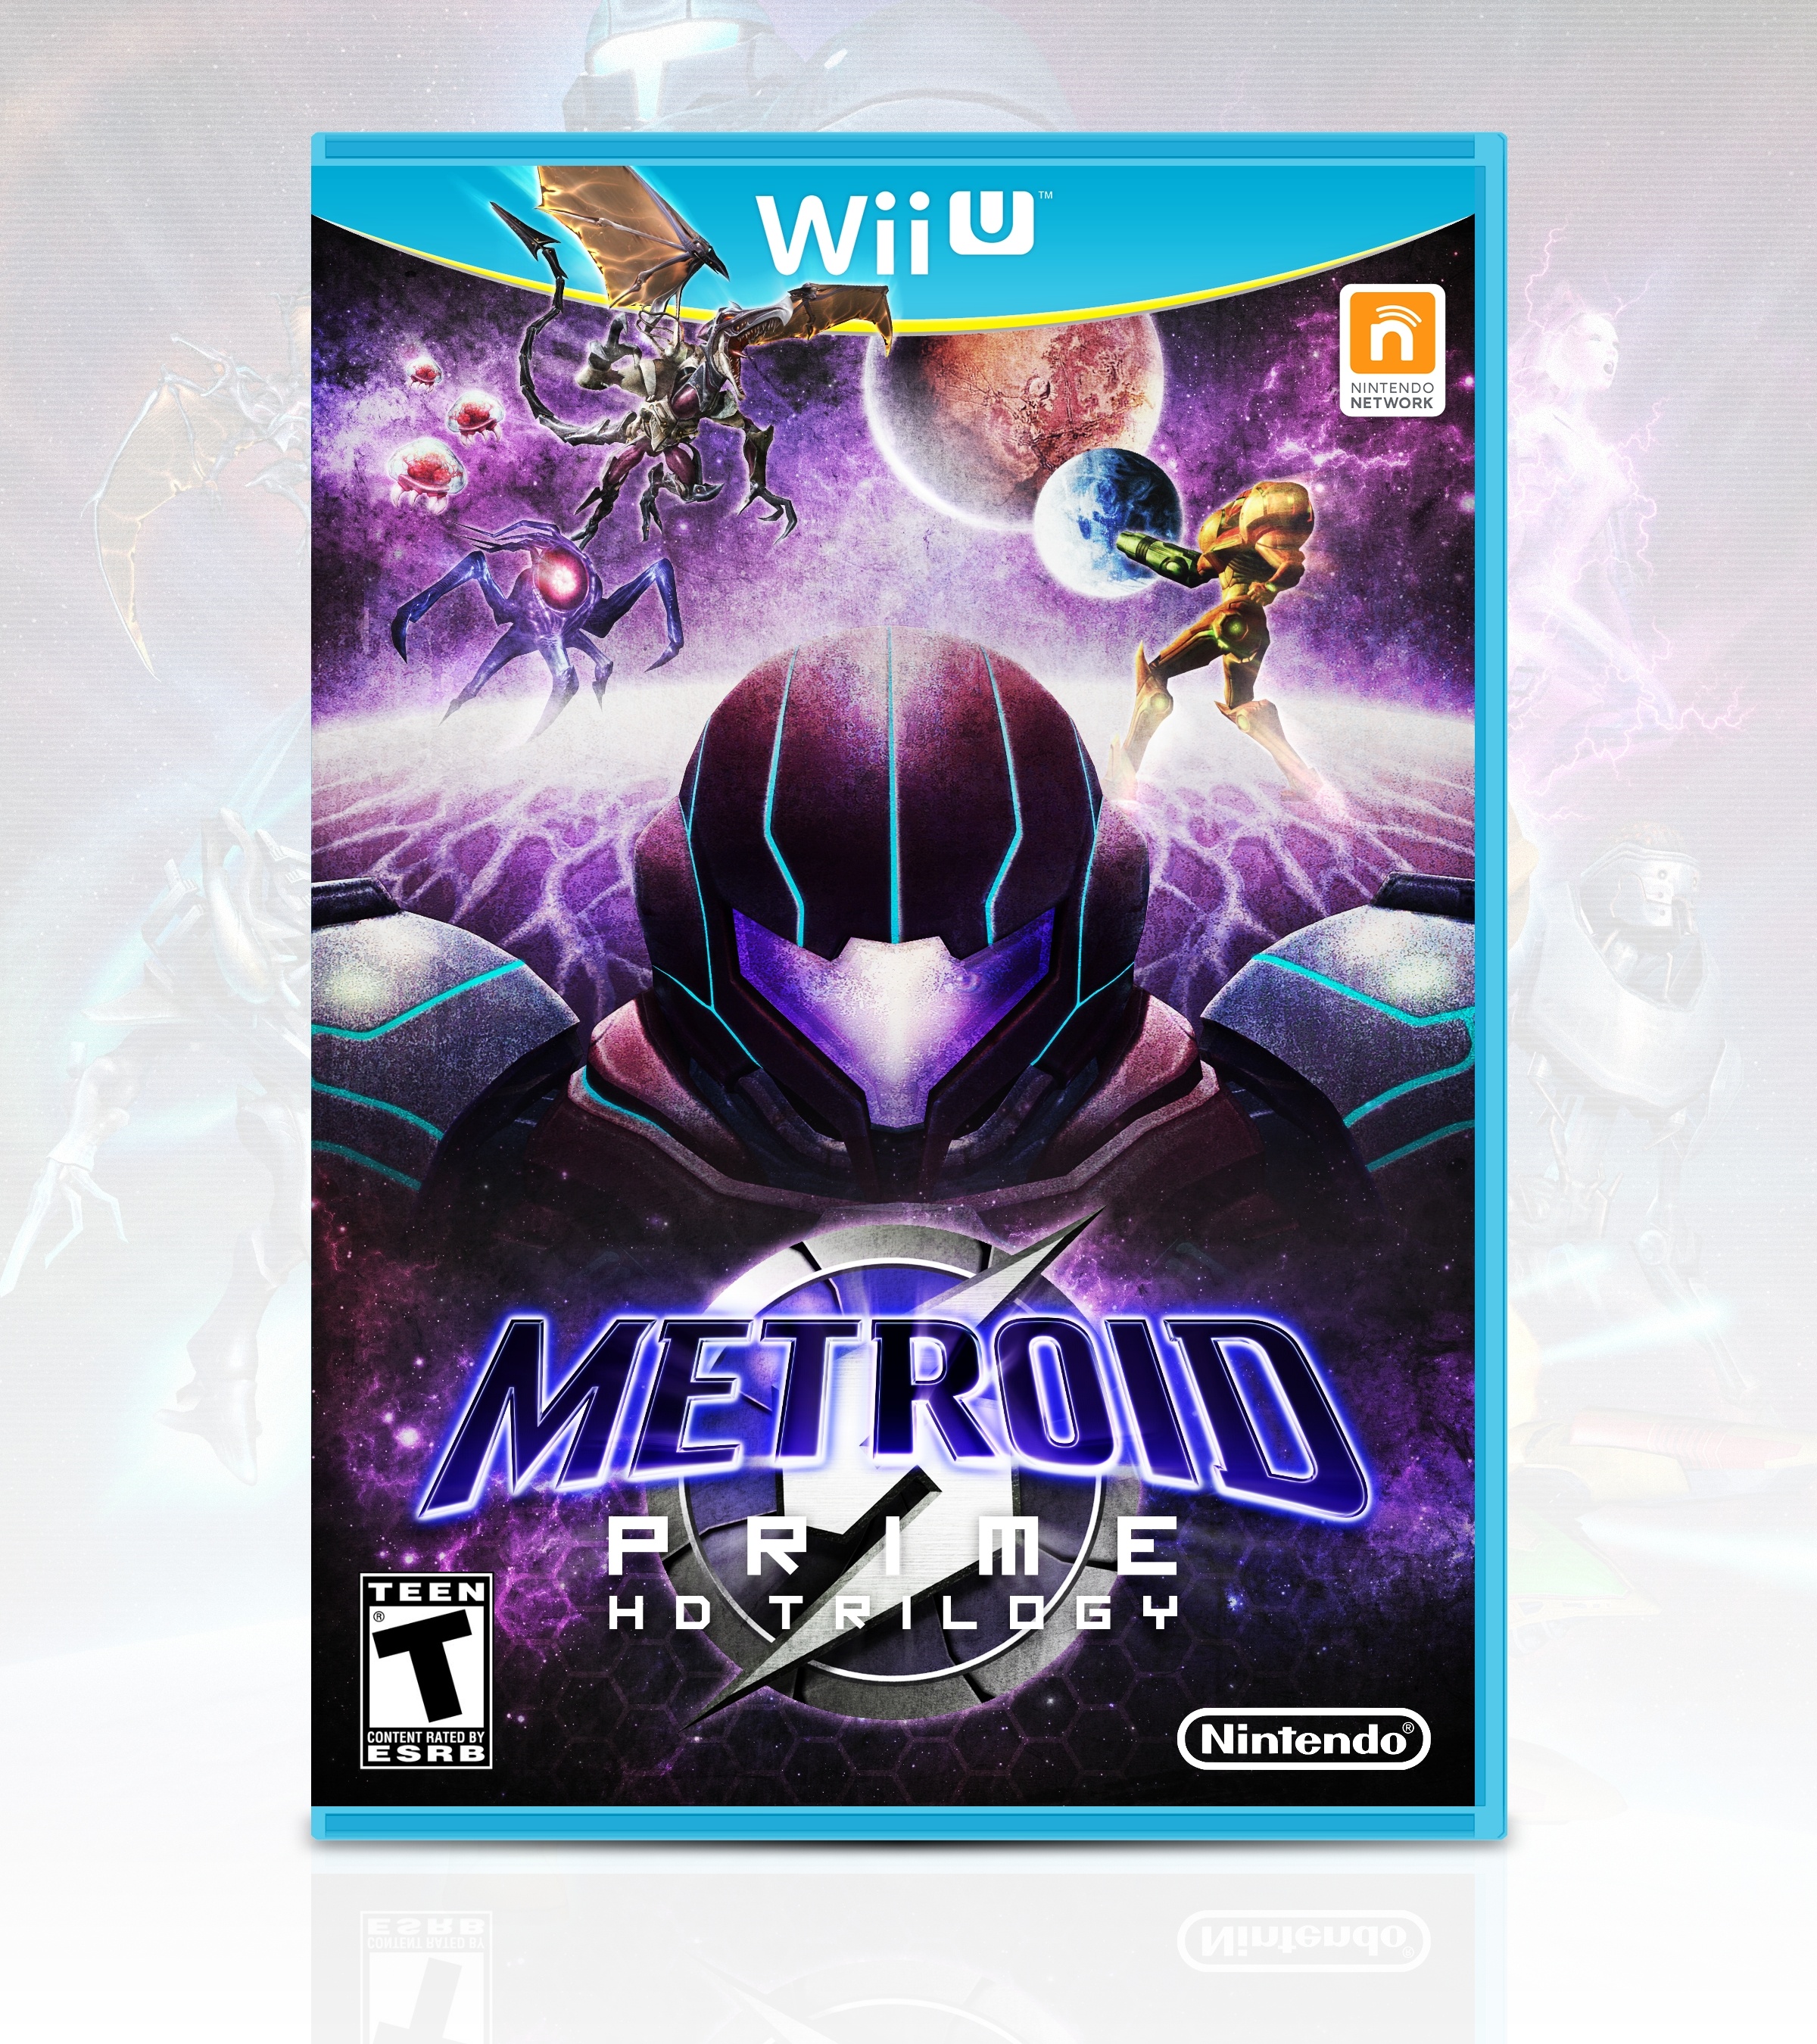 Metroid Prime Trilogy box cover